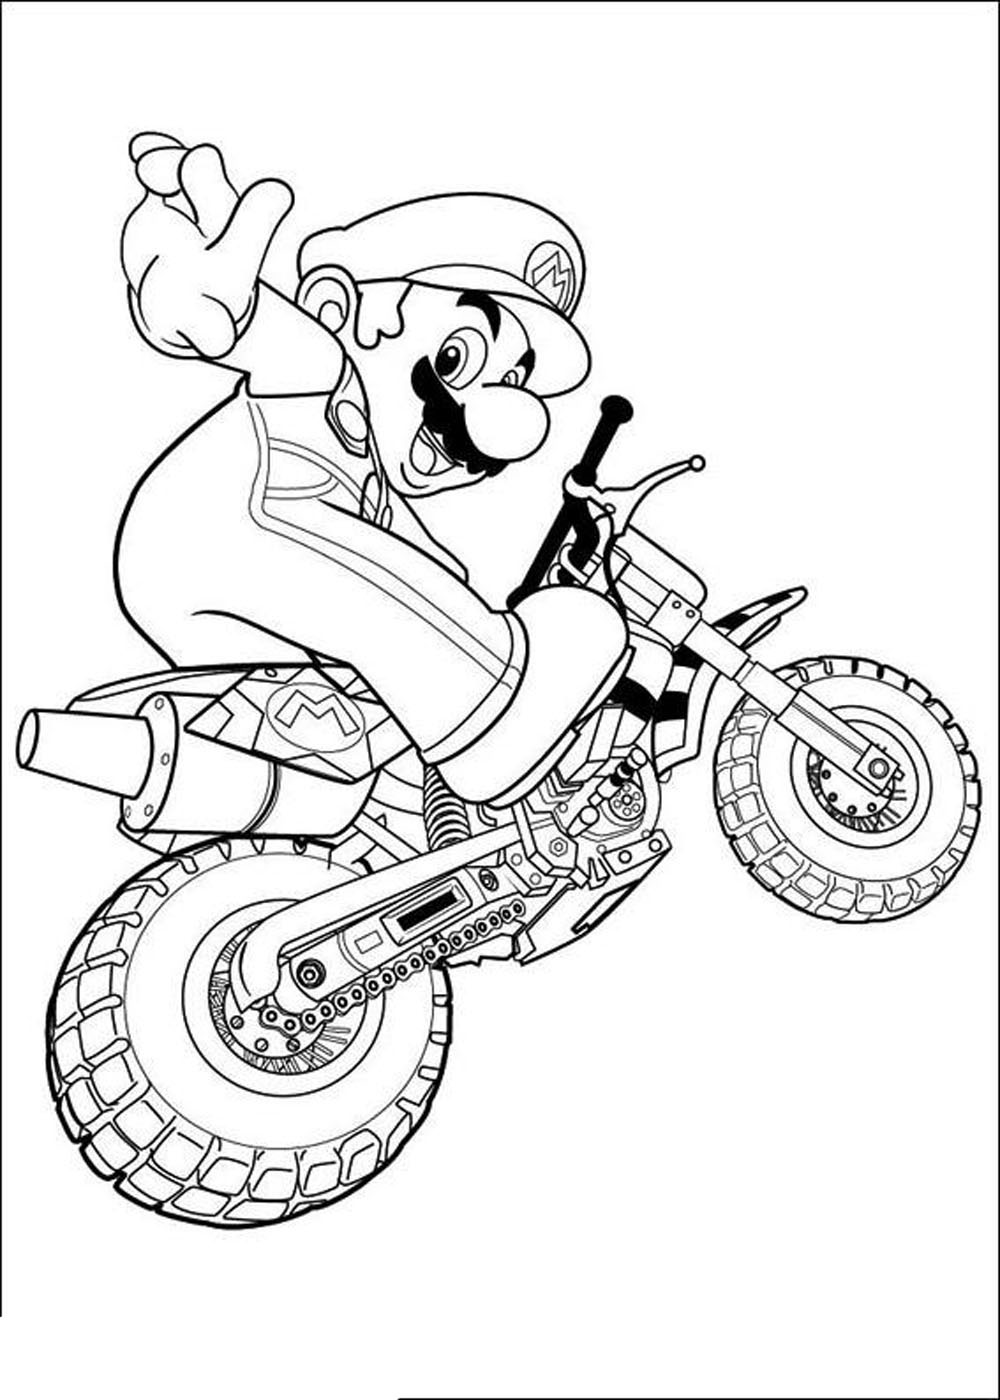 Mario Kart Coloring Page 2